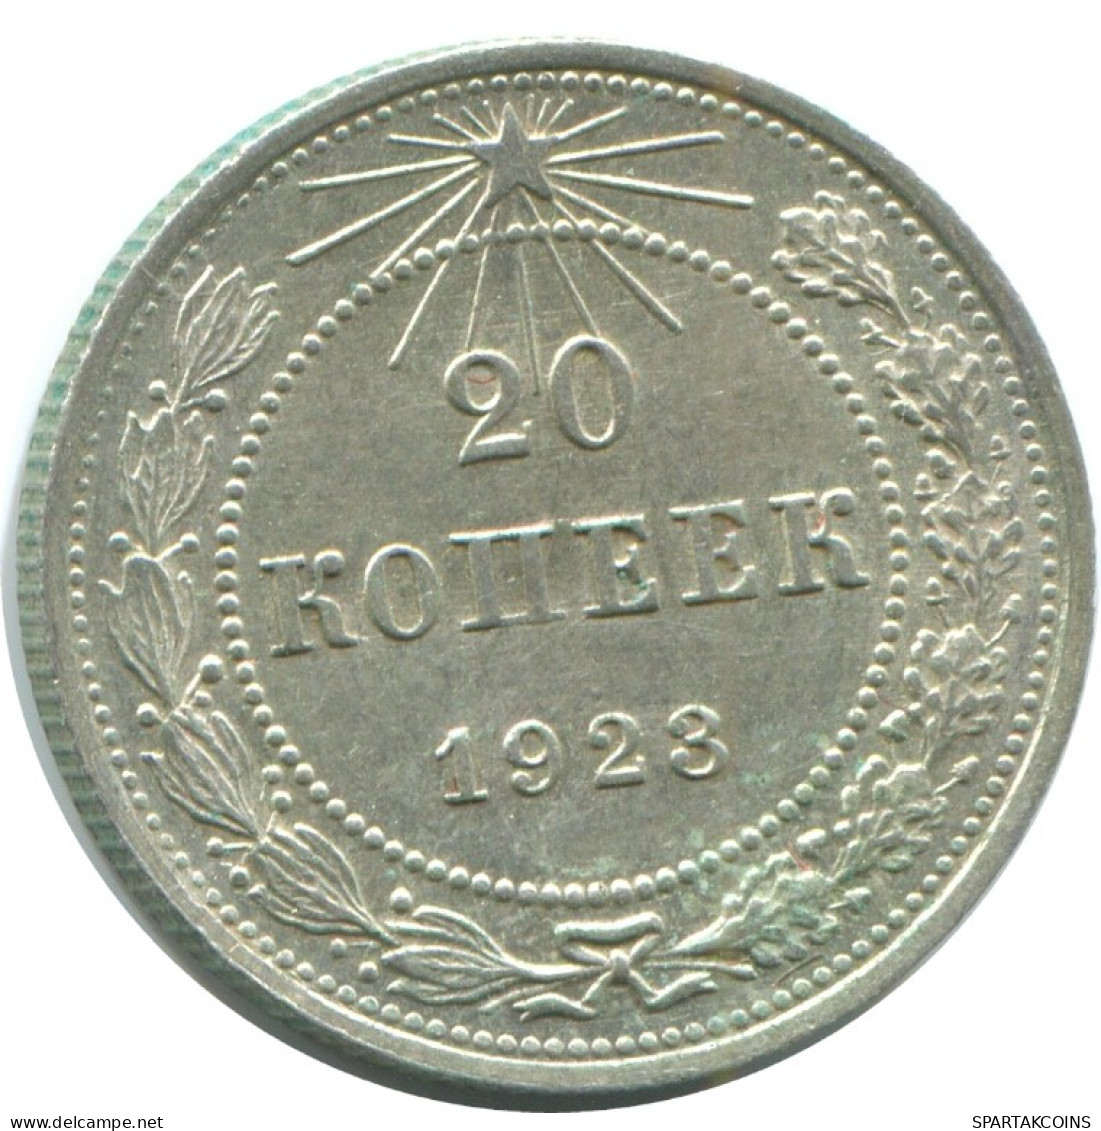 20 KOPEKS 1923 RUSSLAND RUSSIA RSFSR SILBER Münze HIGH GRADE #AF462.4.D.A - Rusland